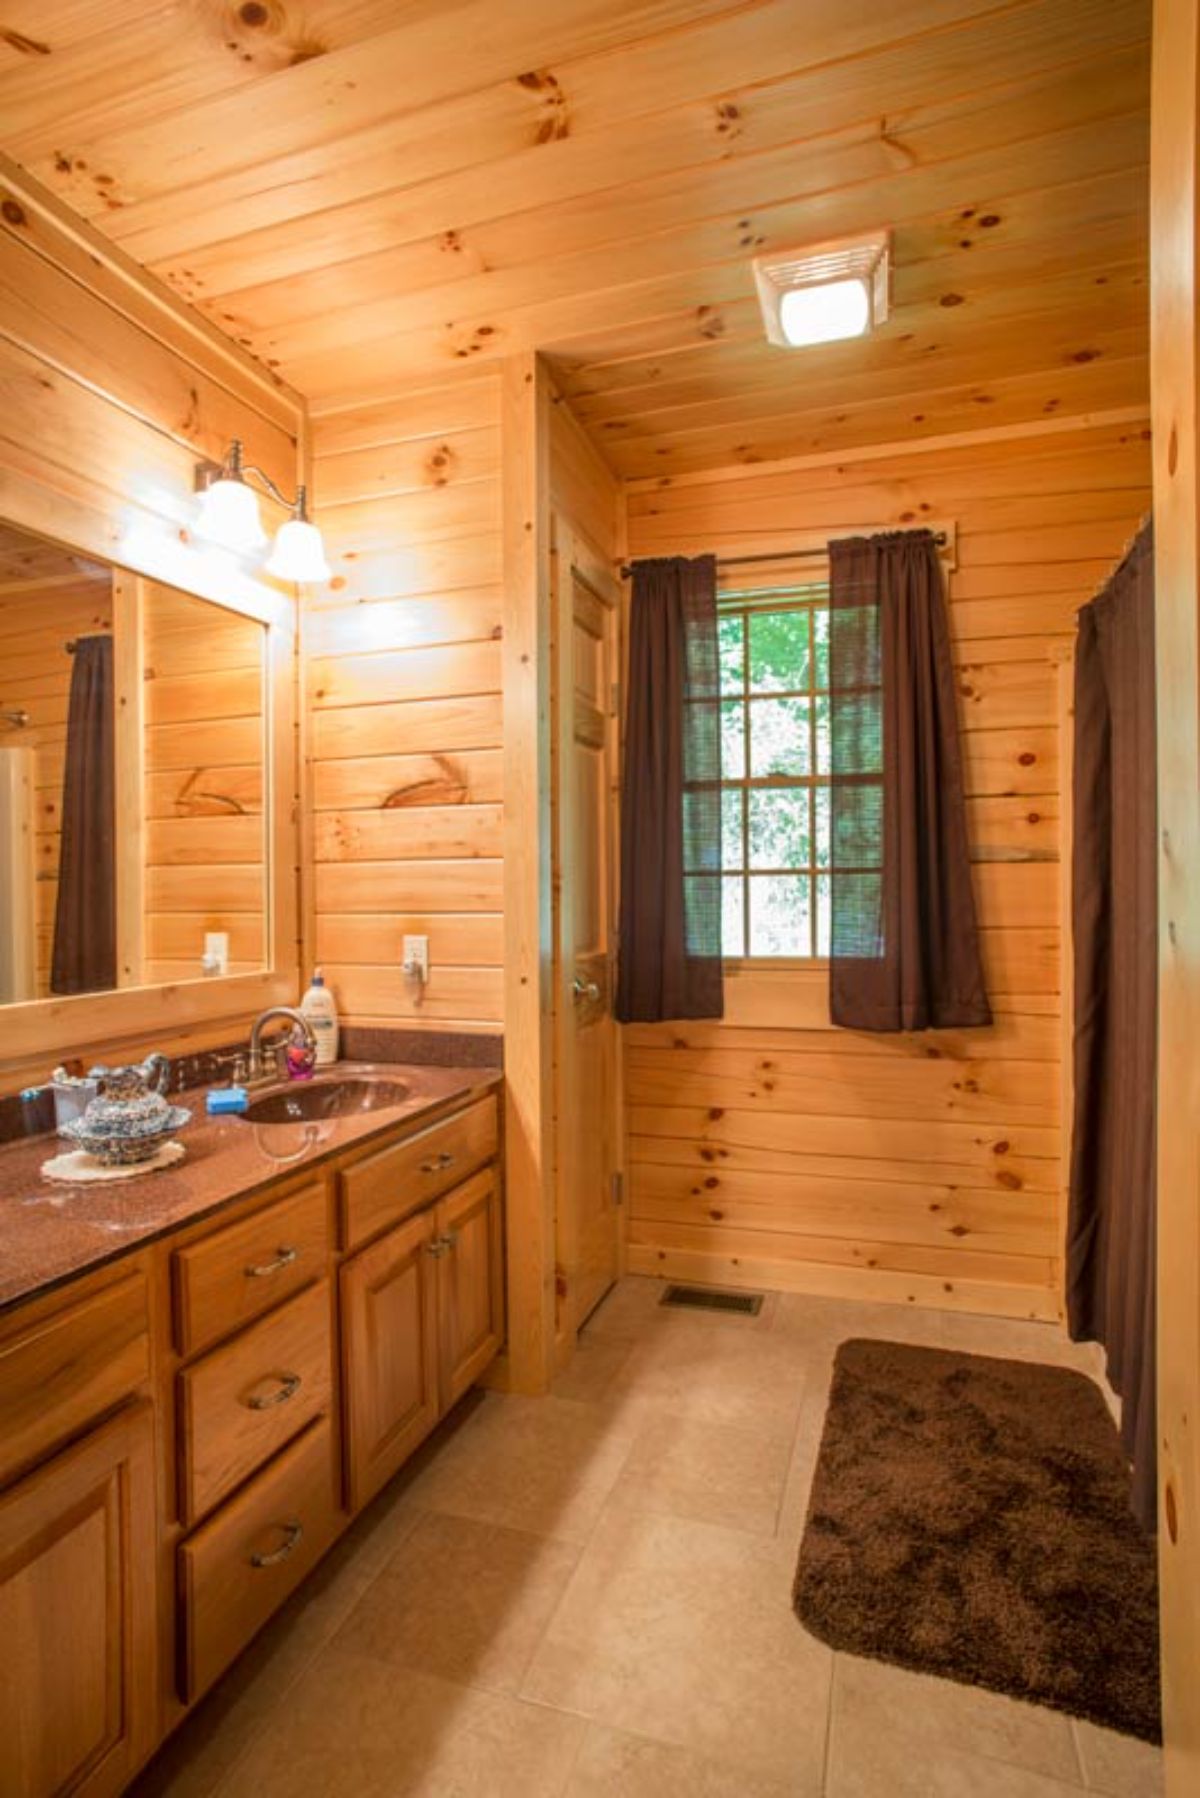 wood vanity with brown curtains on windows in log cabin bathroom